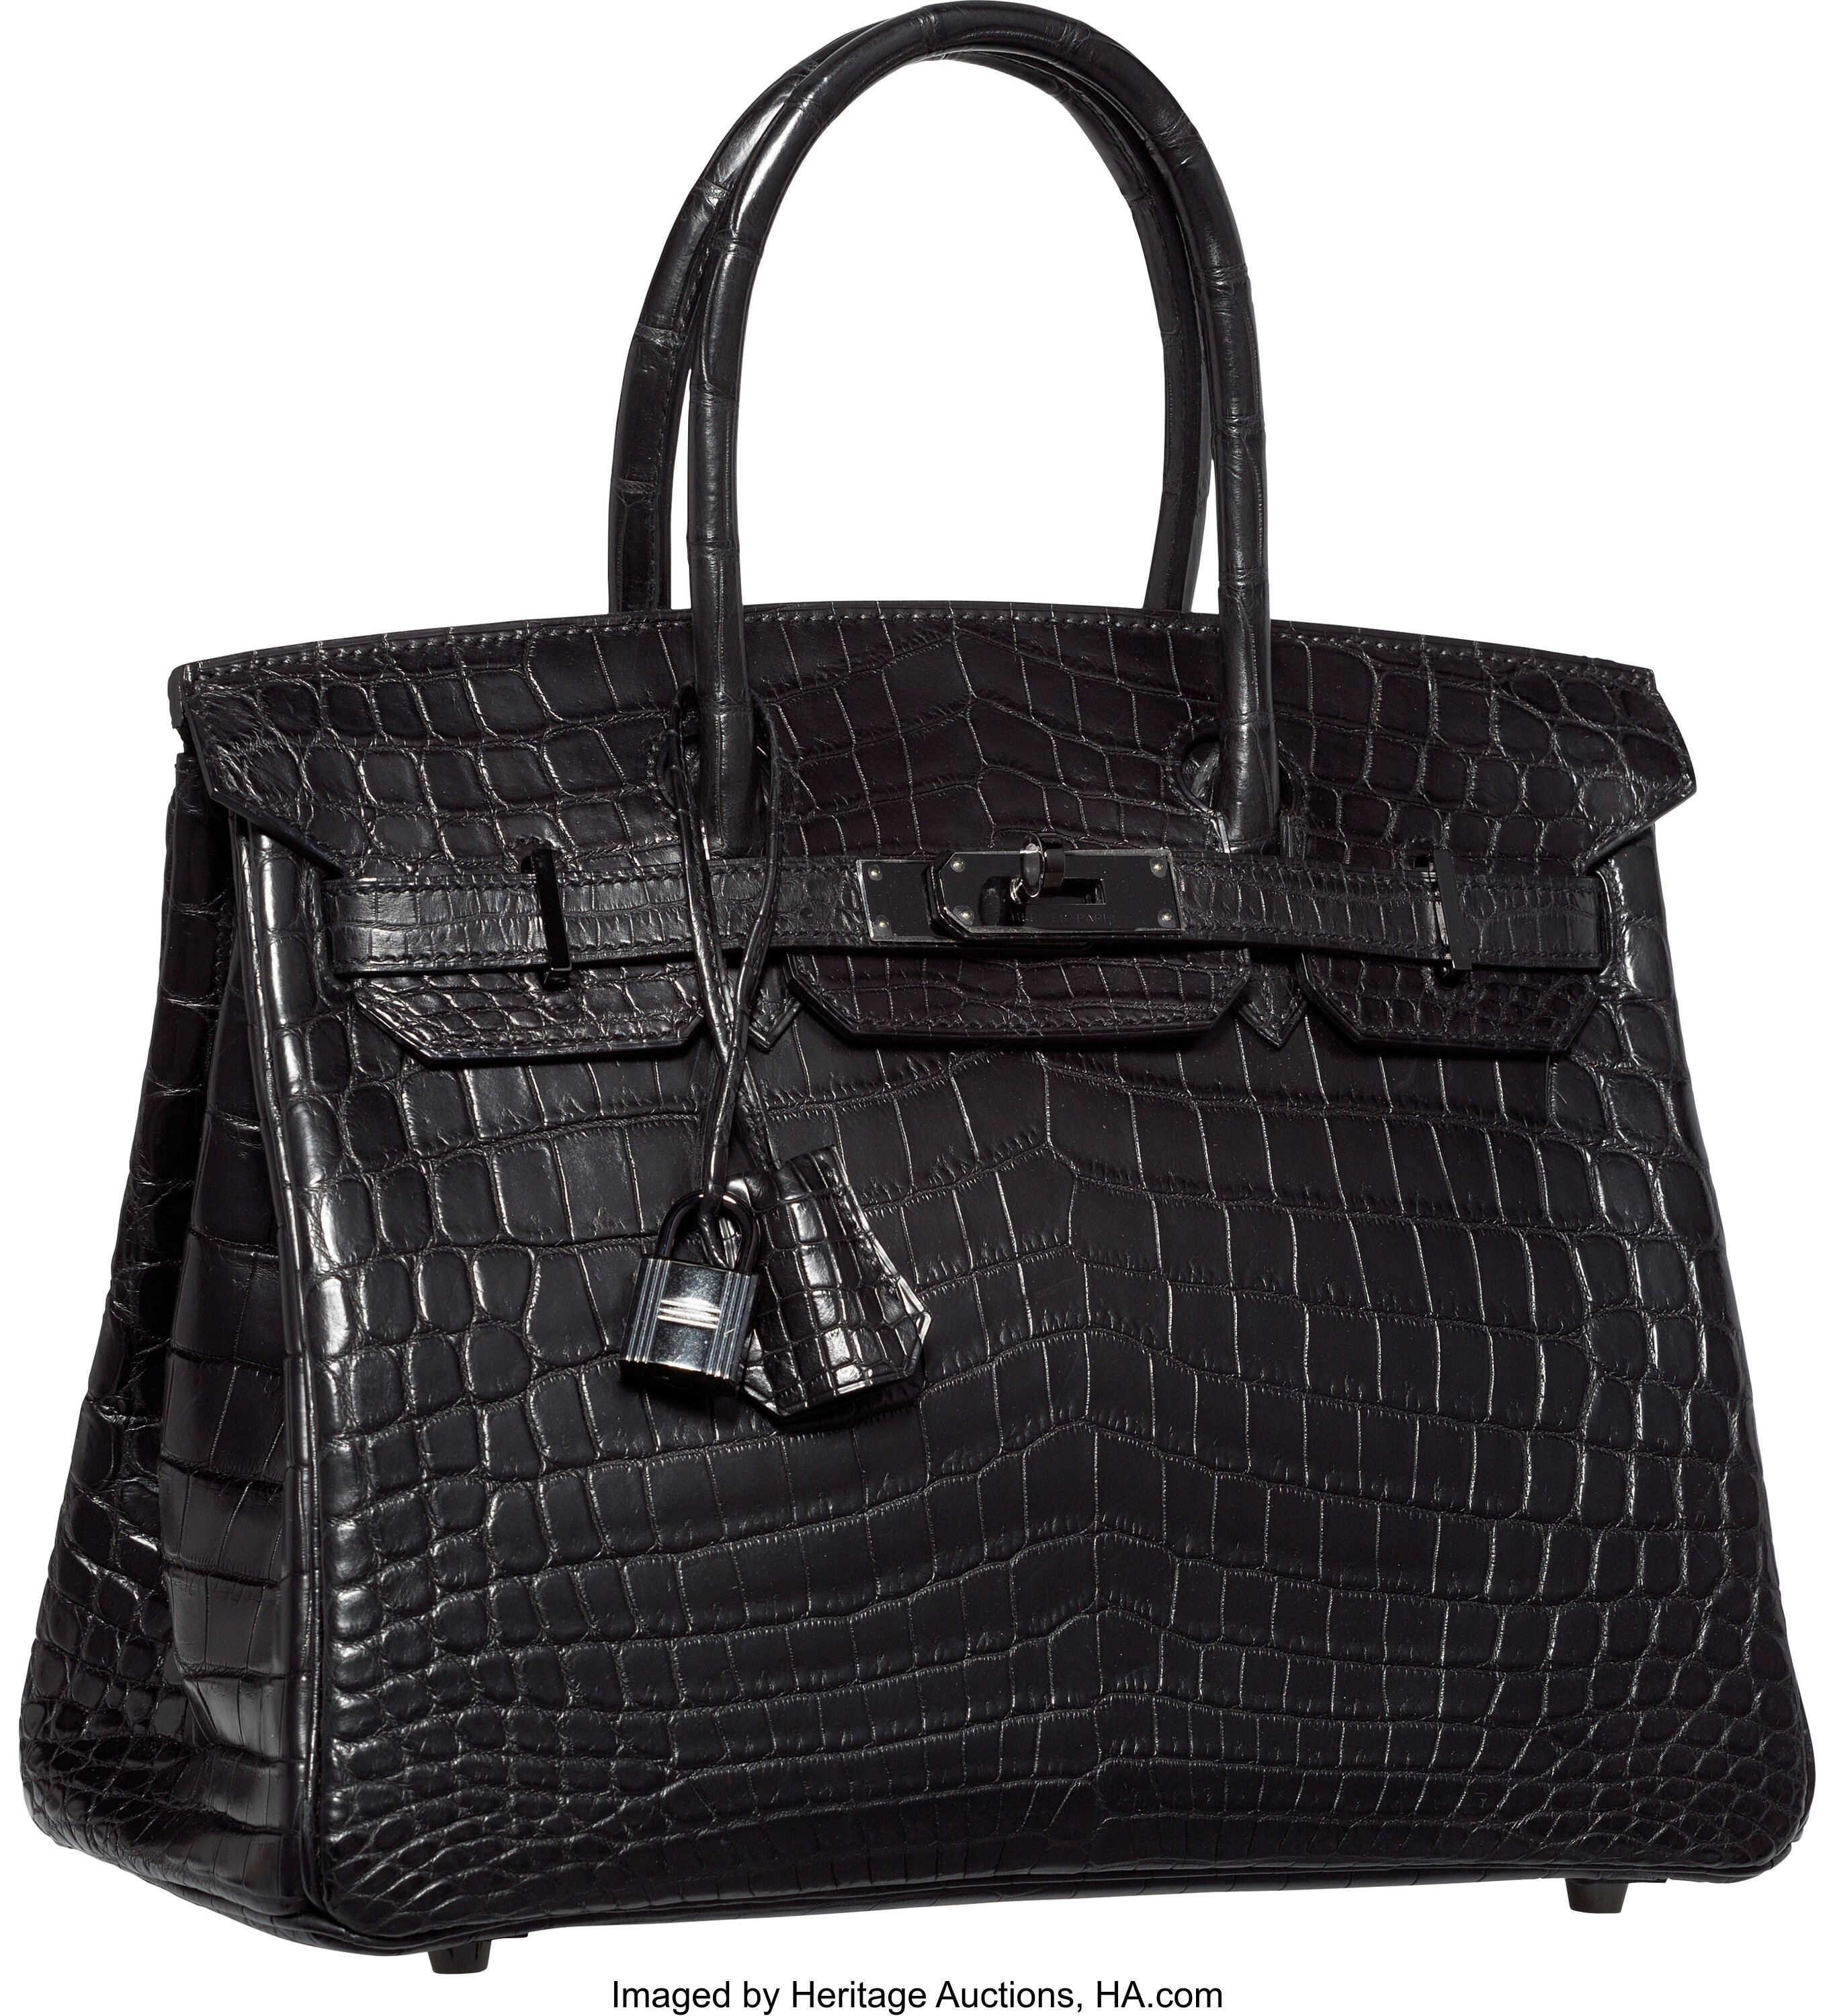 Birkin30 so black nilo crocodile designer handbag#hermesbirkin #hermes